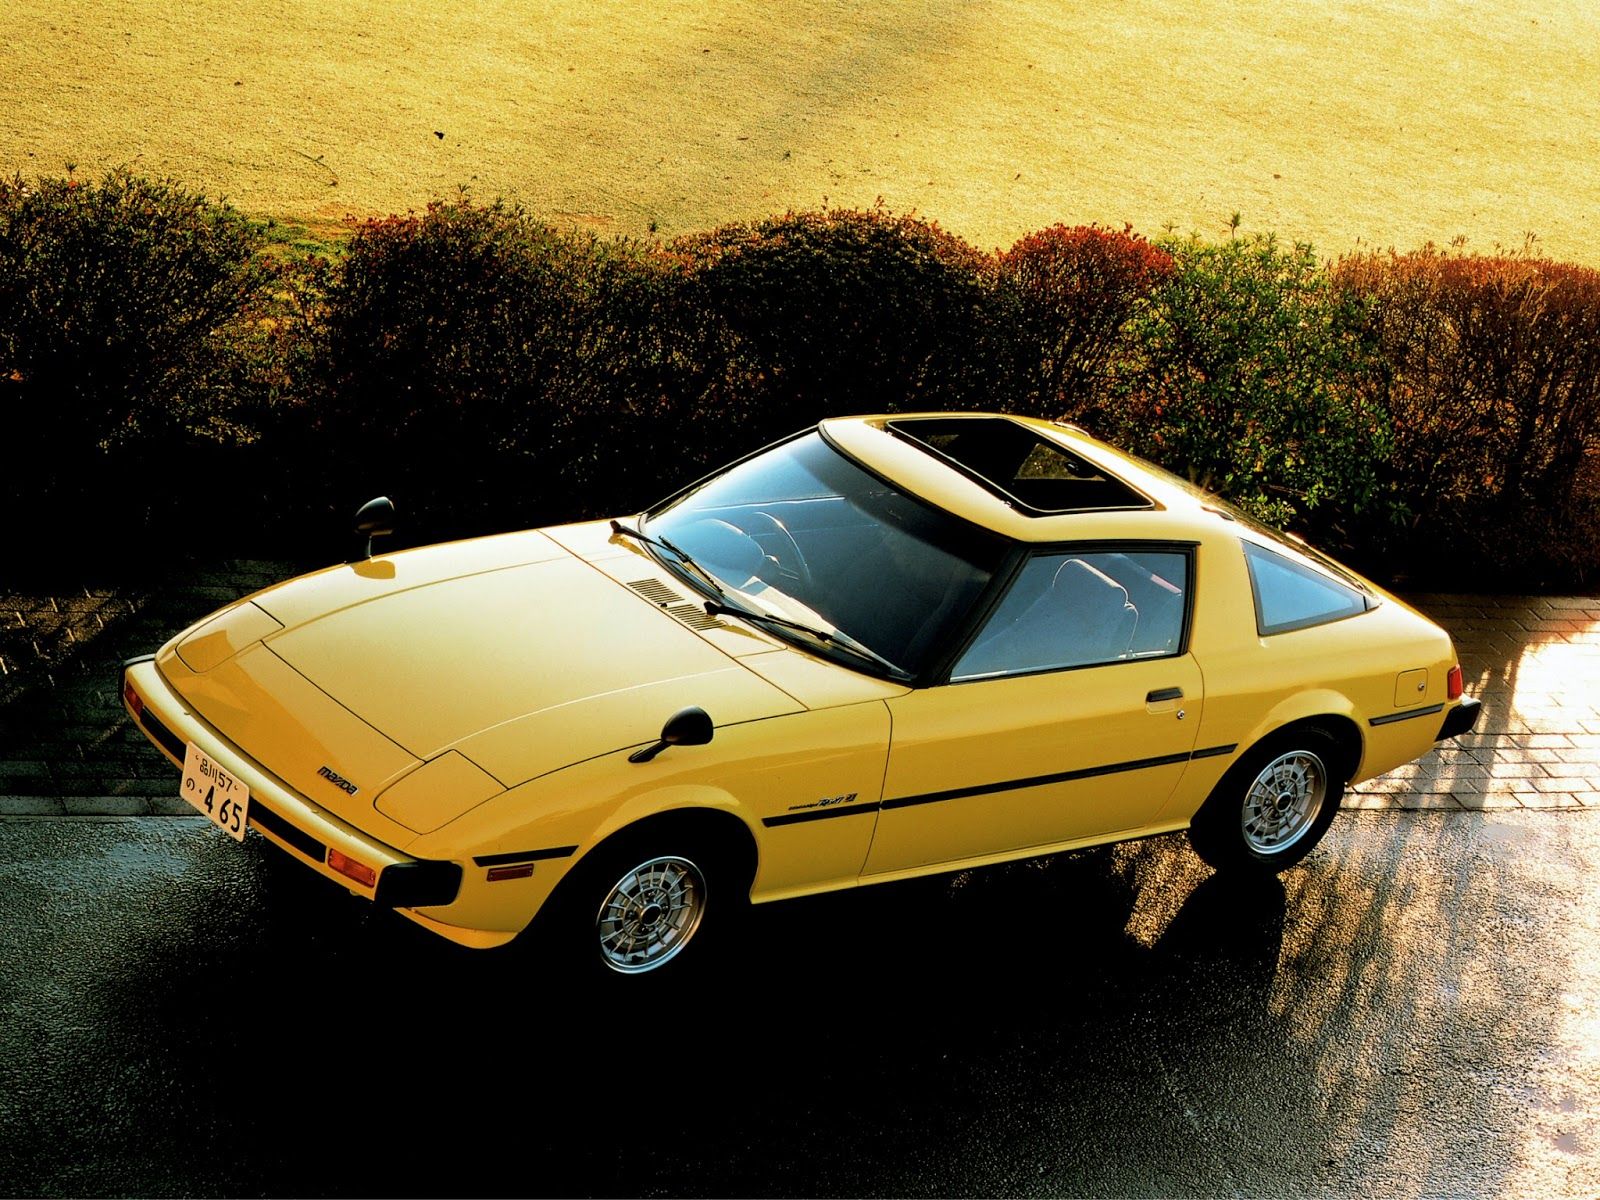 1980 Mazda RX-7 first generation